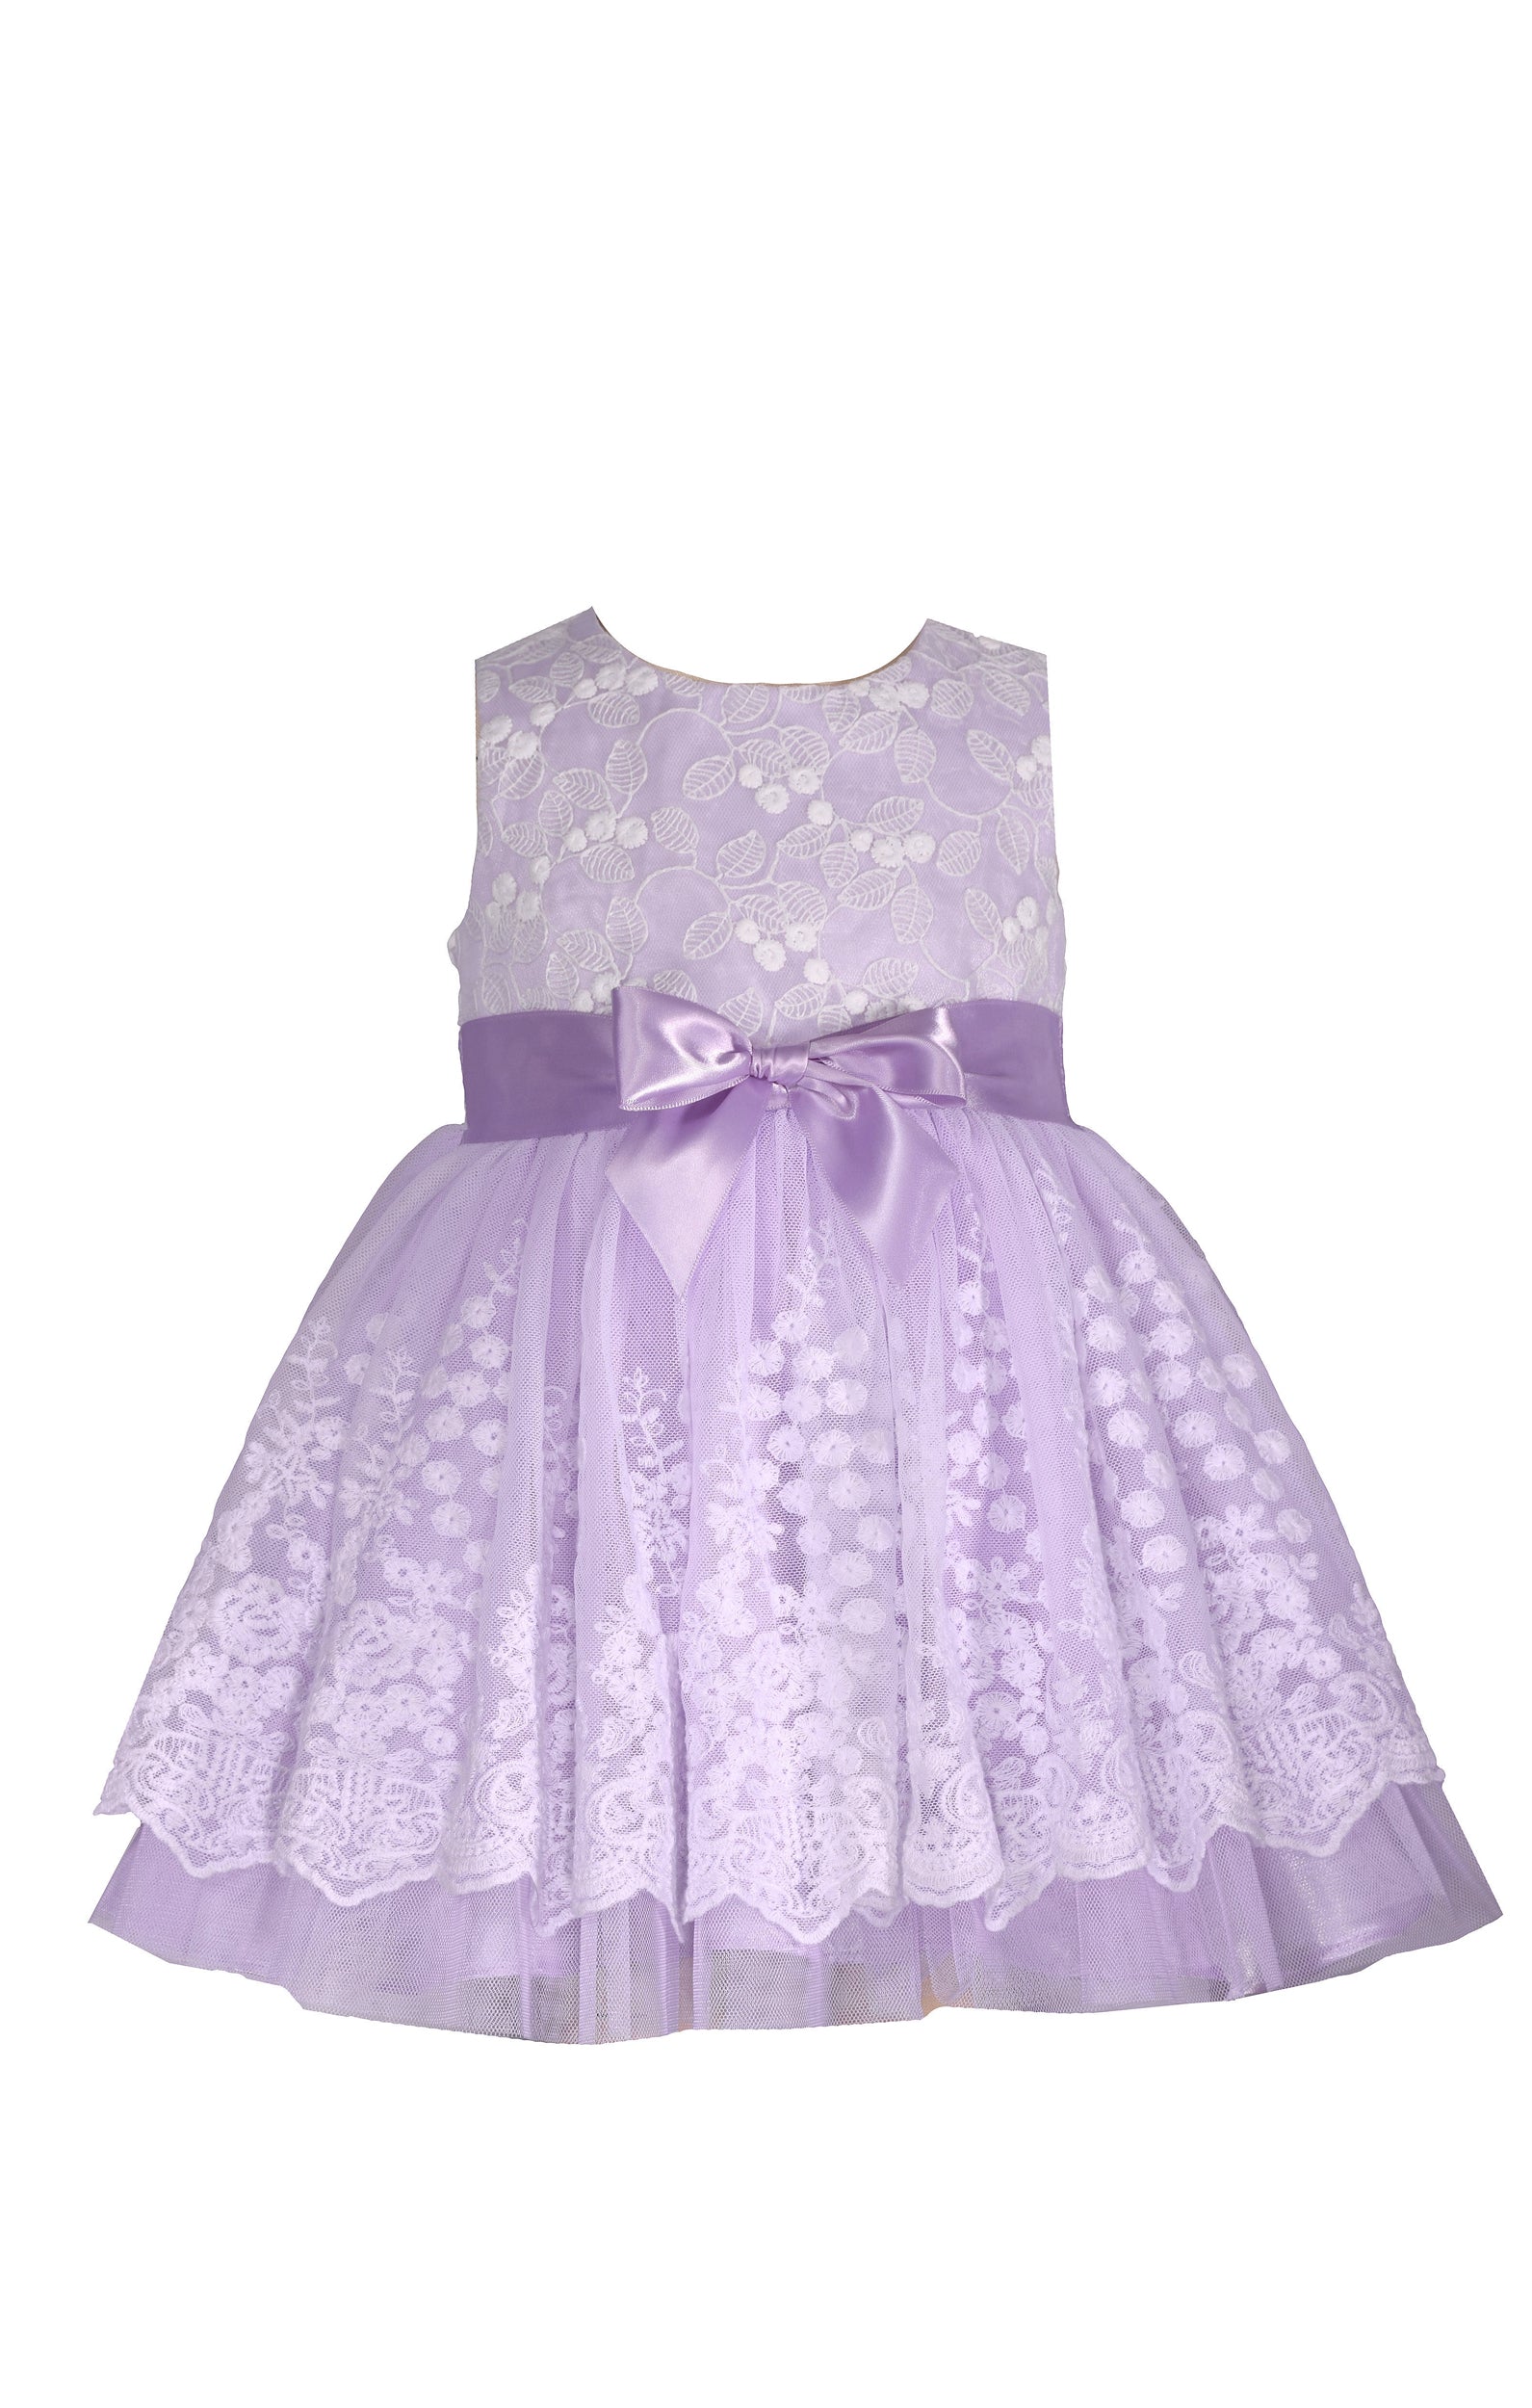 Bonnie Jean Lavender Embroided Dress